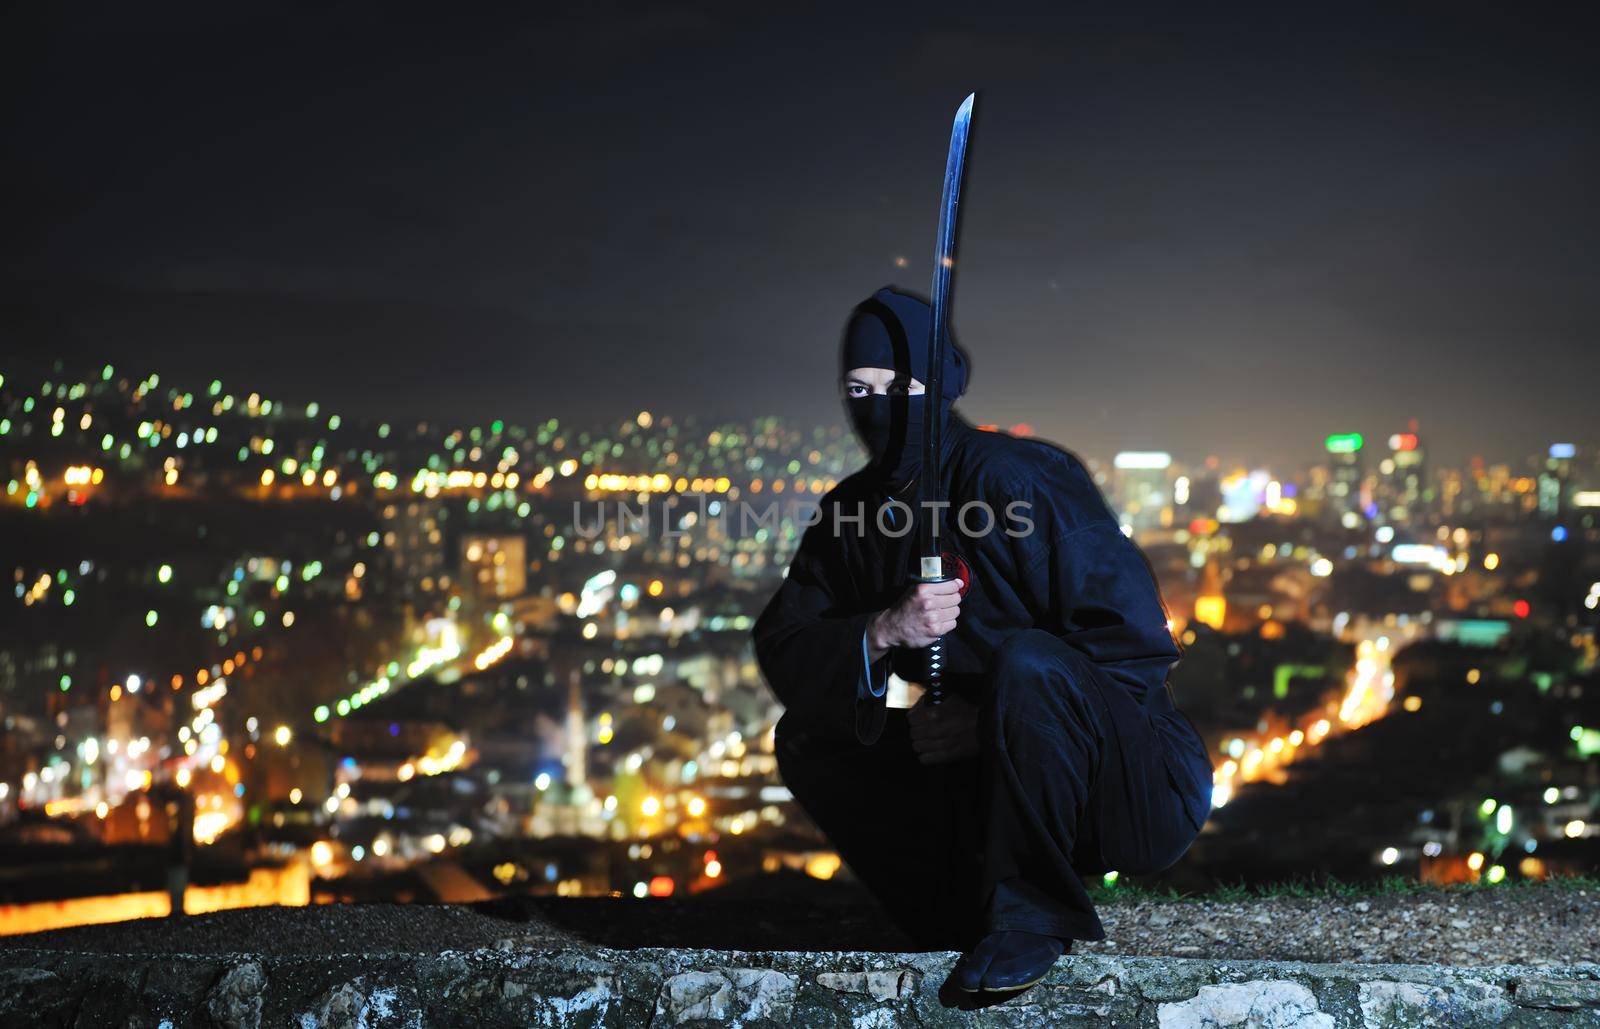 ninja assasin hold katana samurai old martial weapon swordat night with city lights in background